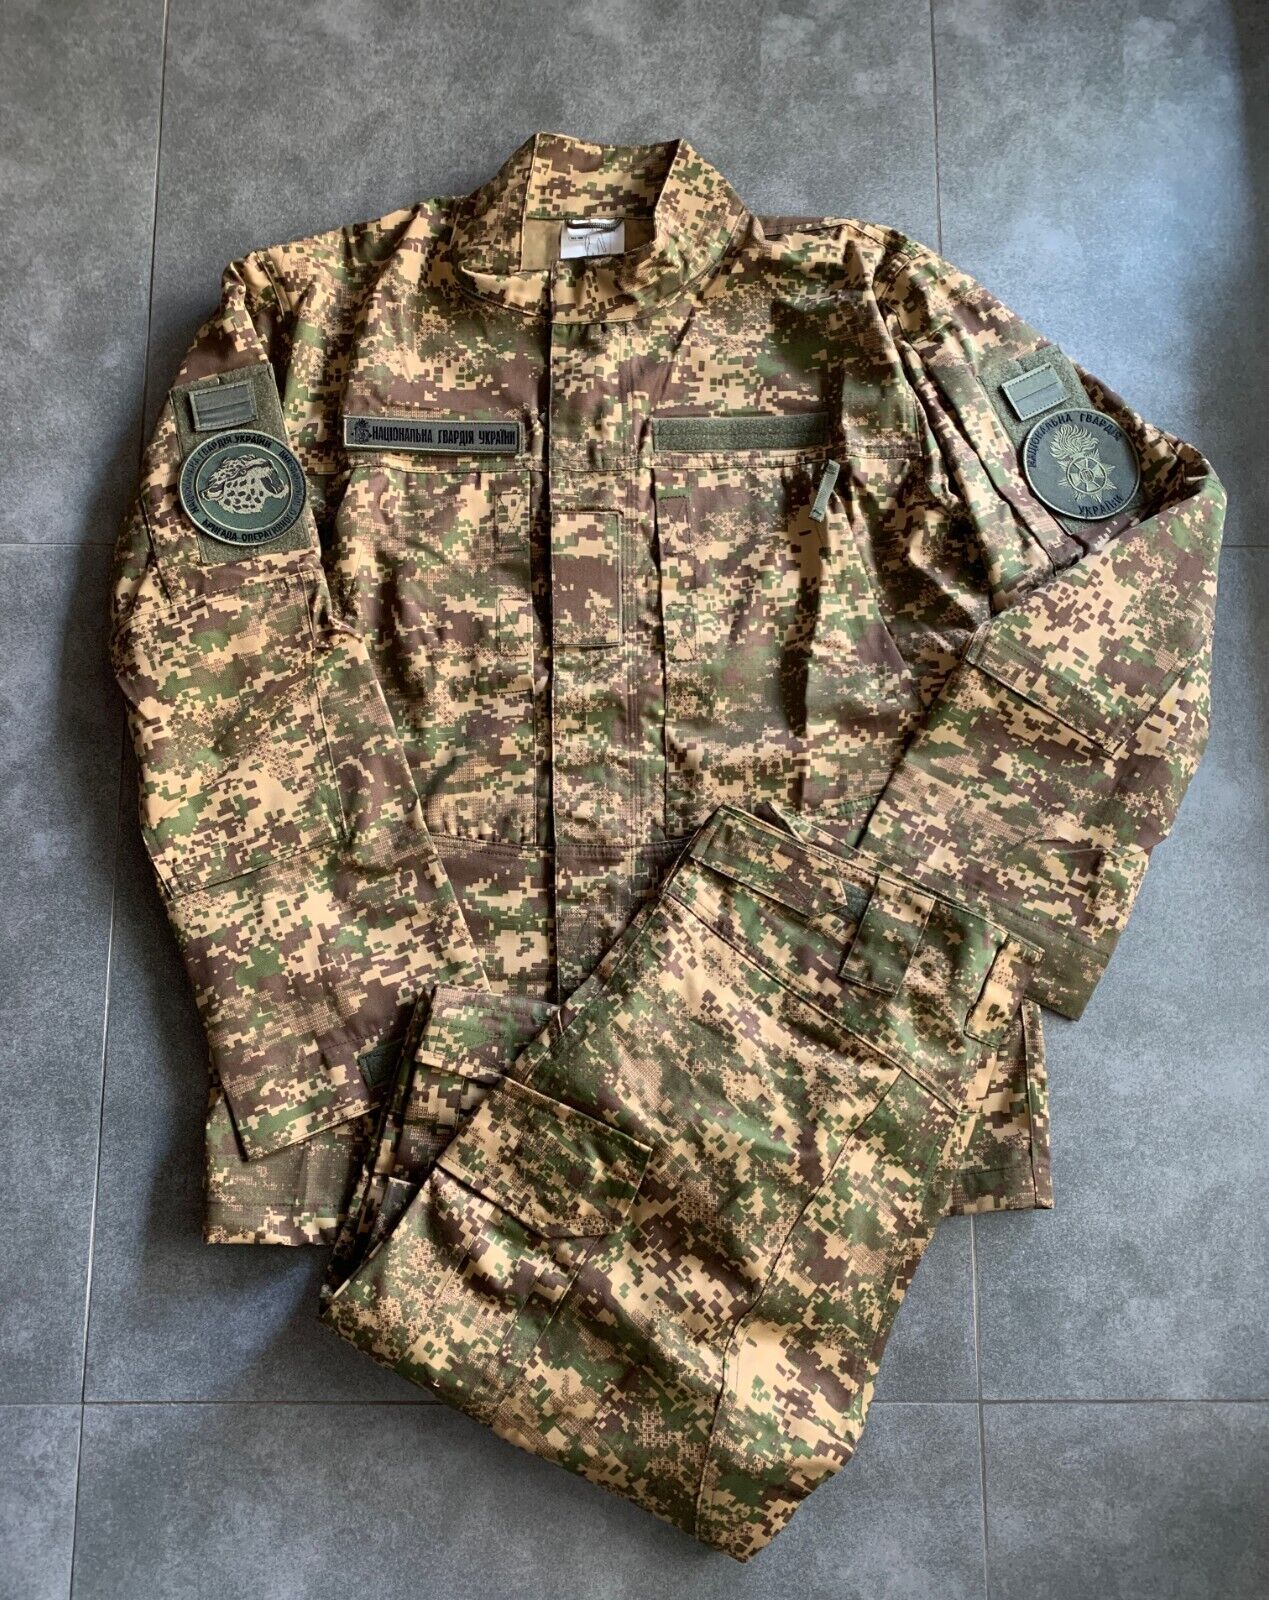 Rare original summer uniform, National Guard of Ukraine, Predator camouflage